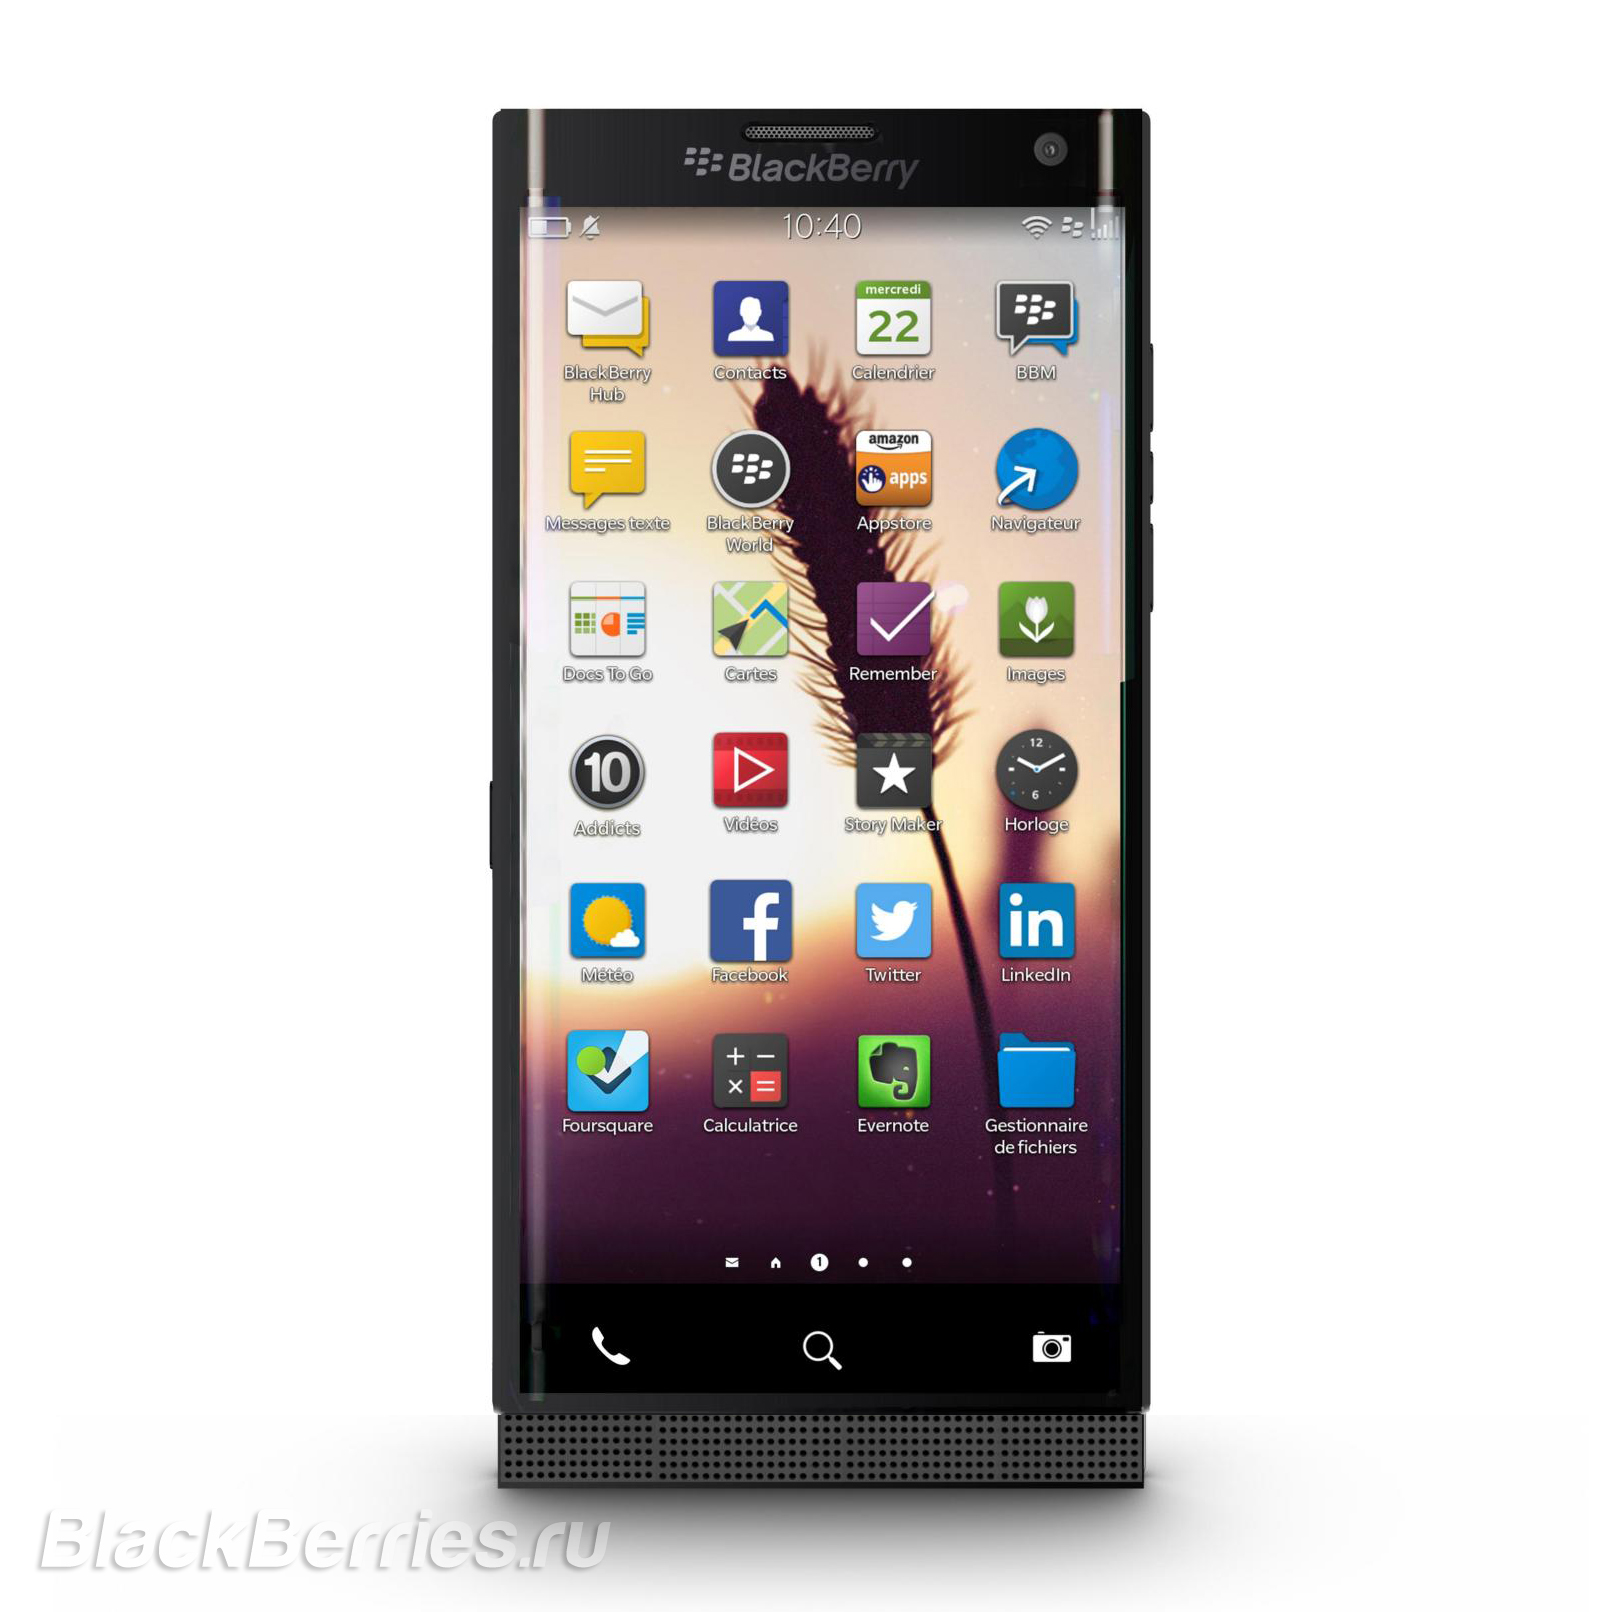 BlackBerry_venice-1